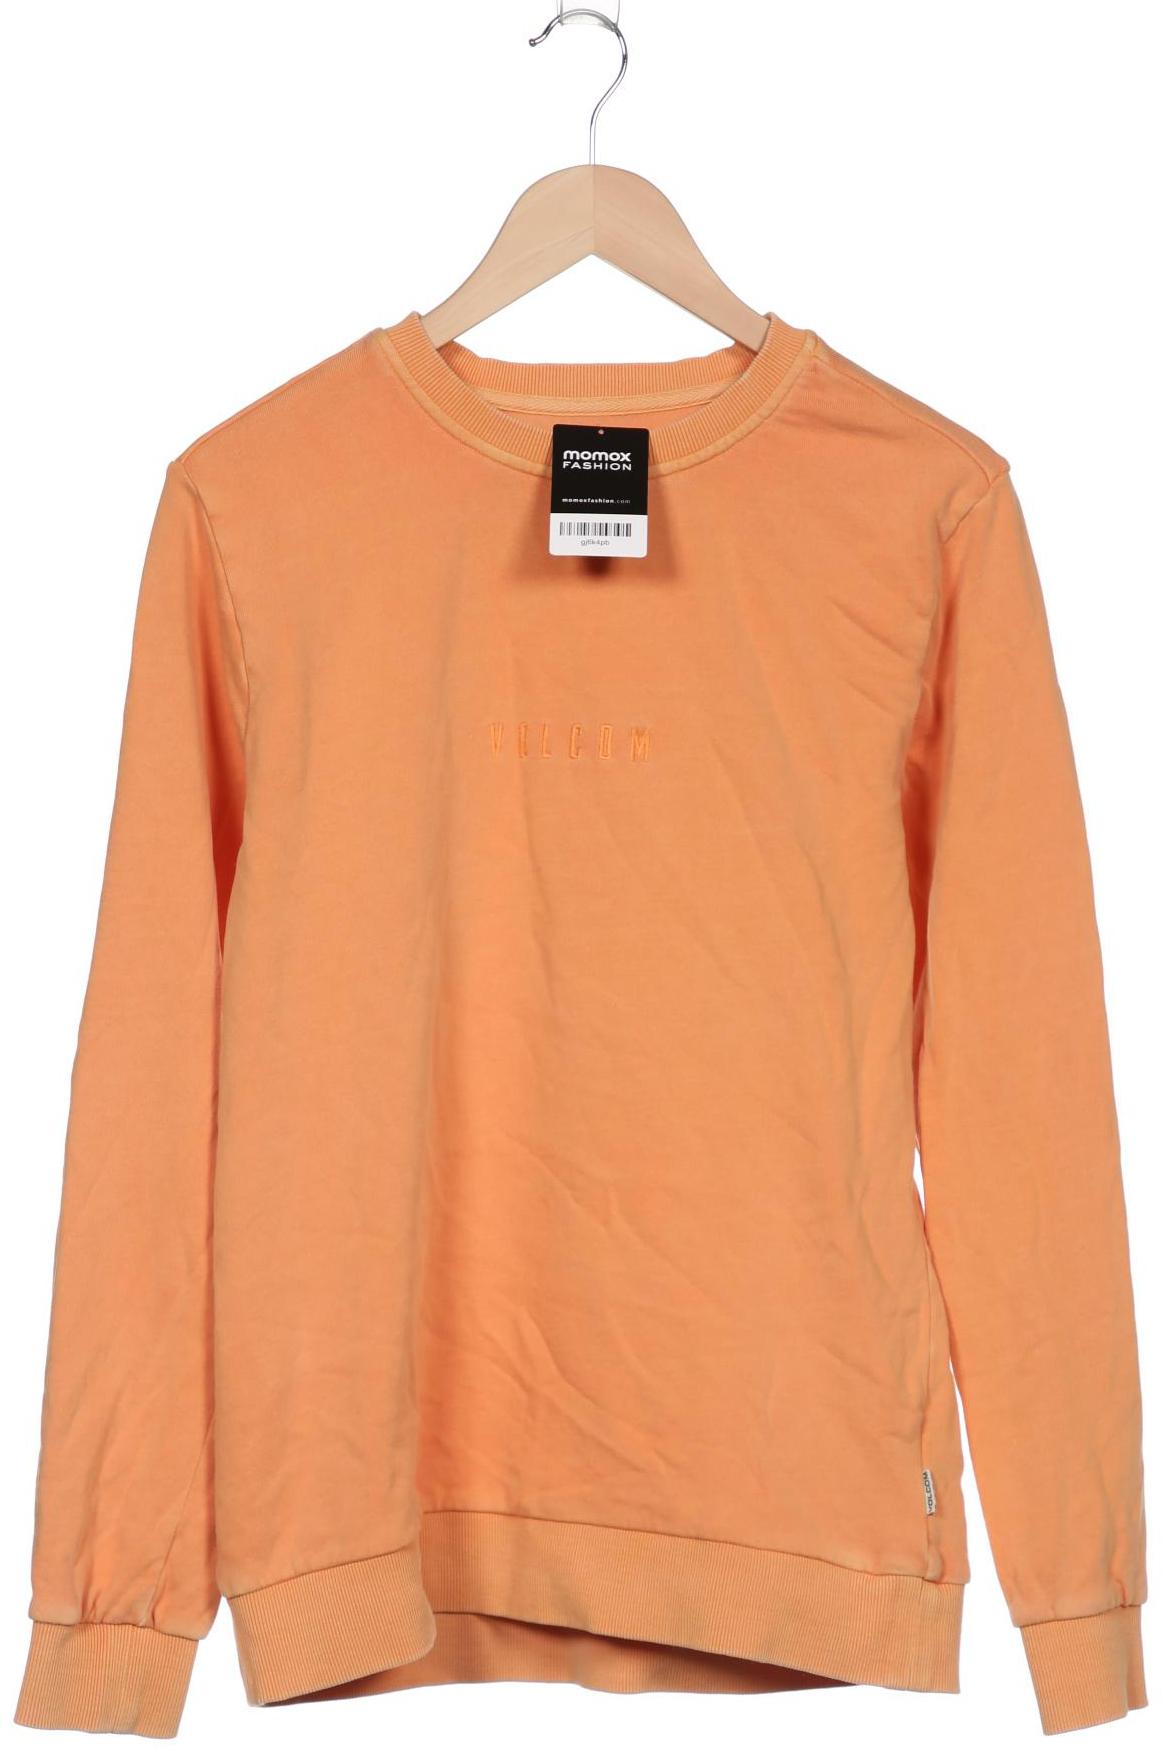 VOLCOM Herren Sweatshirt, orange von Volcom